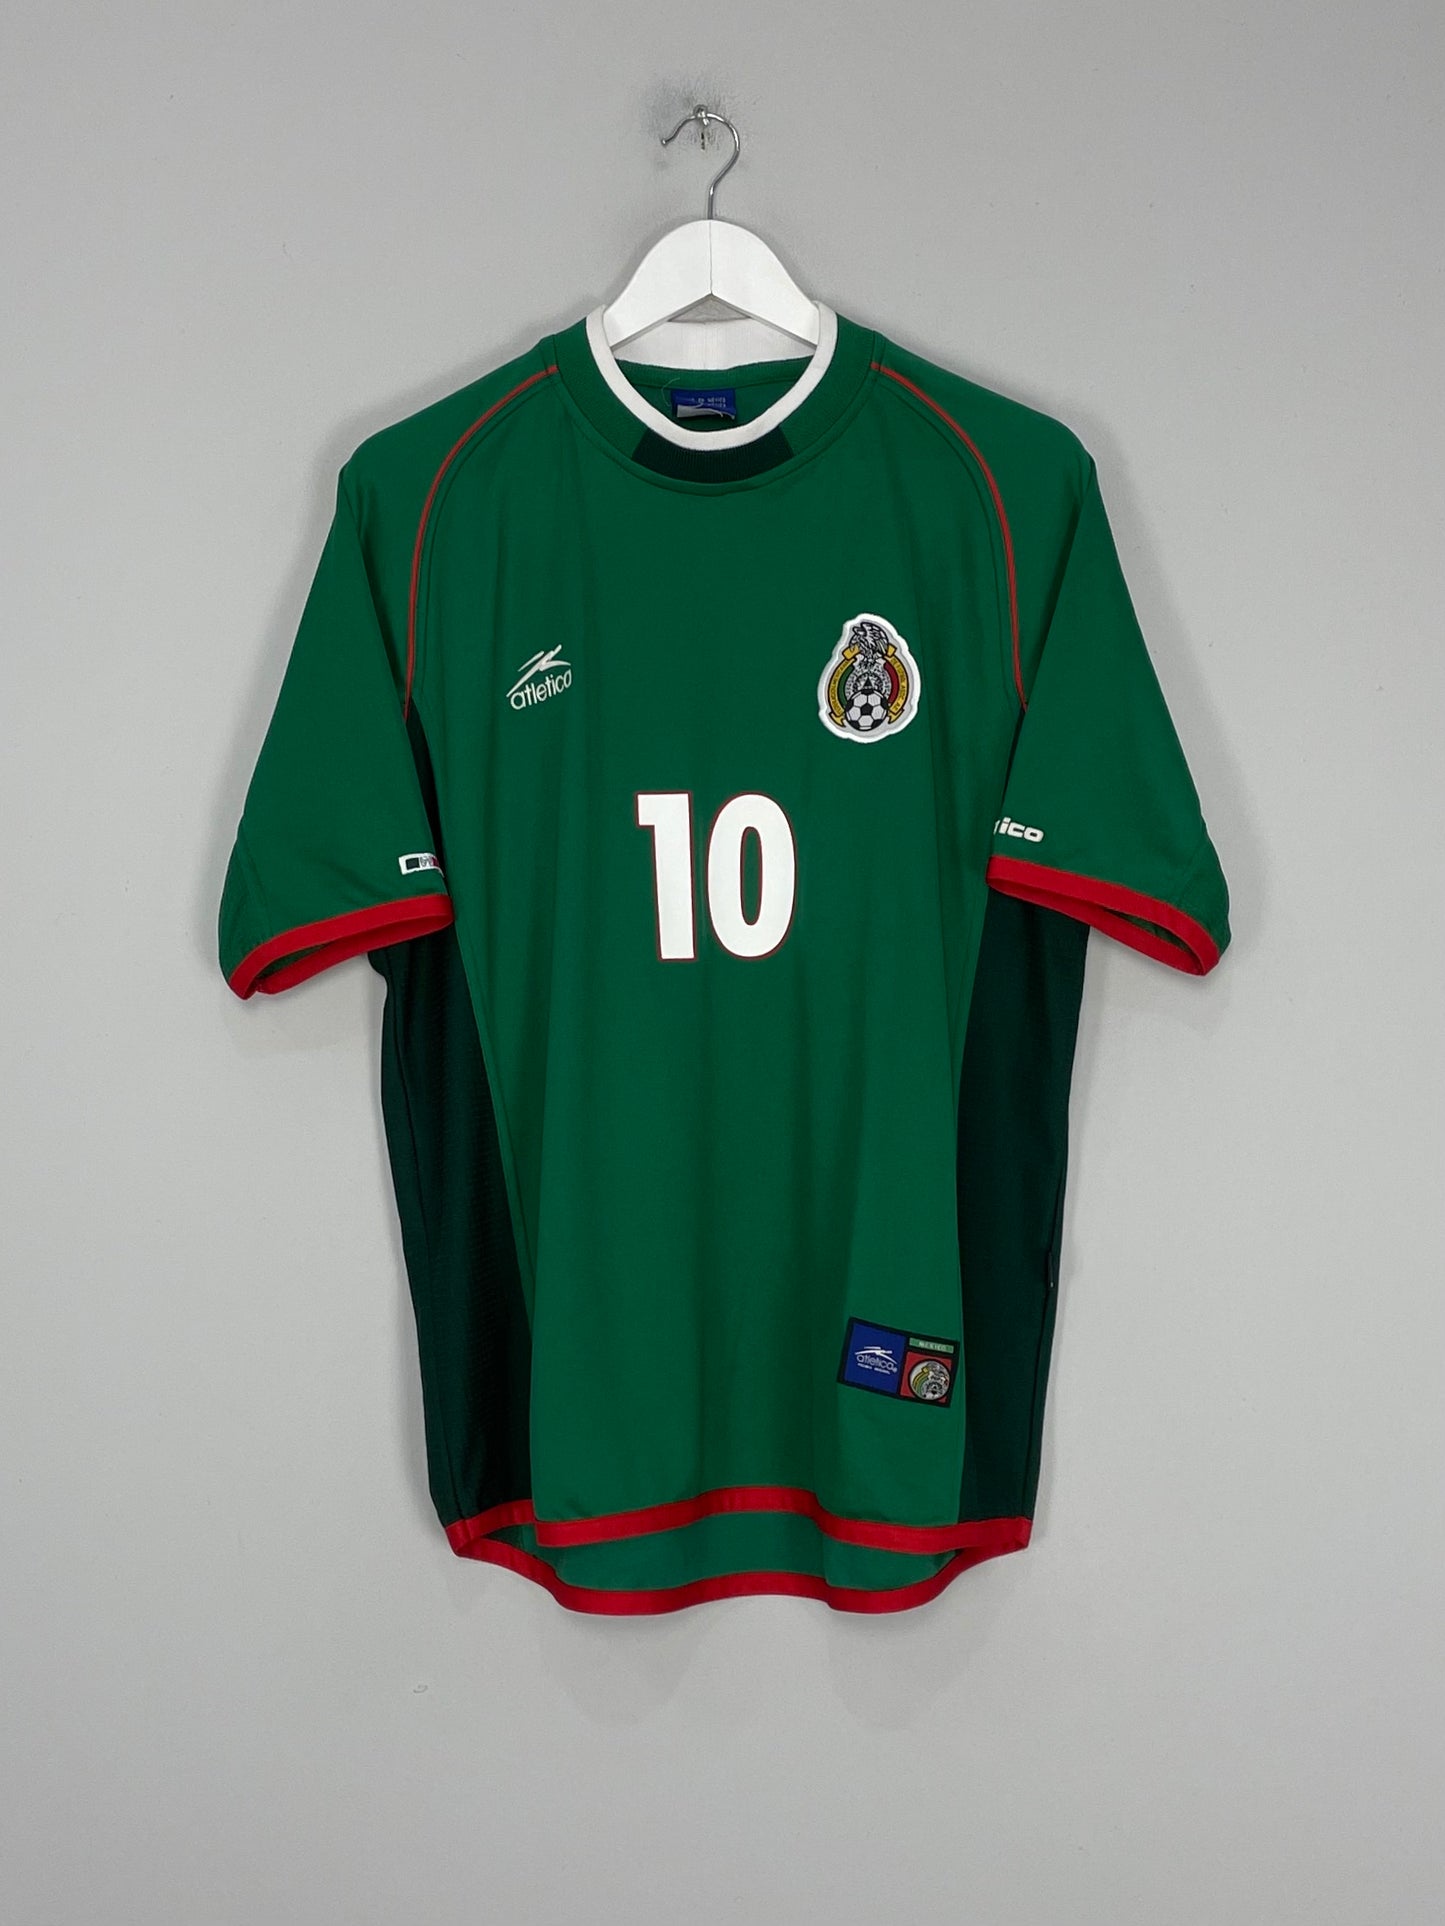 2001/02 MEXICO C.BLANCO #10 HOME SHIRT (L) ATLETICA